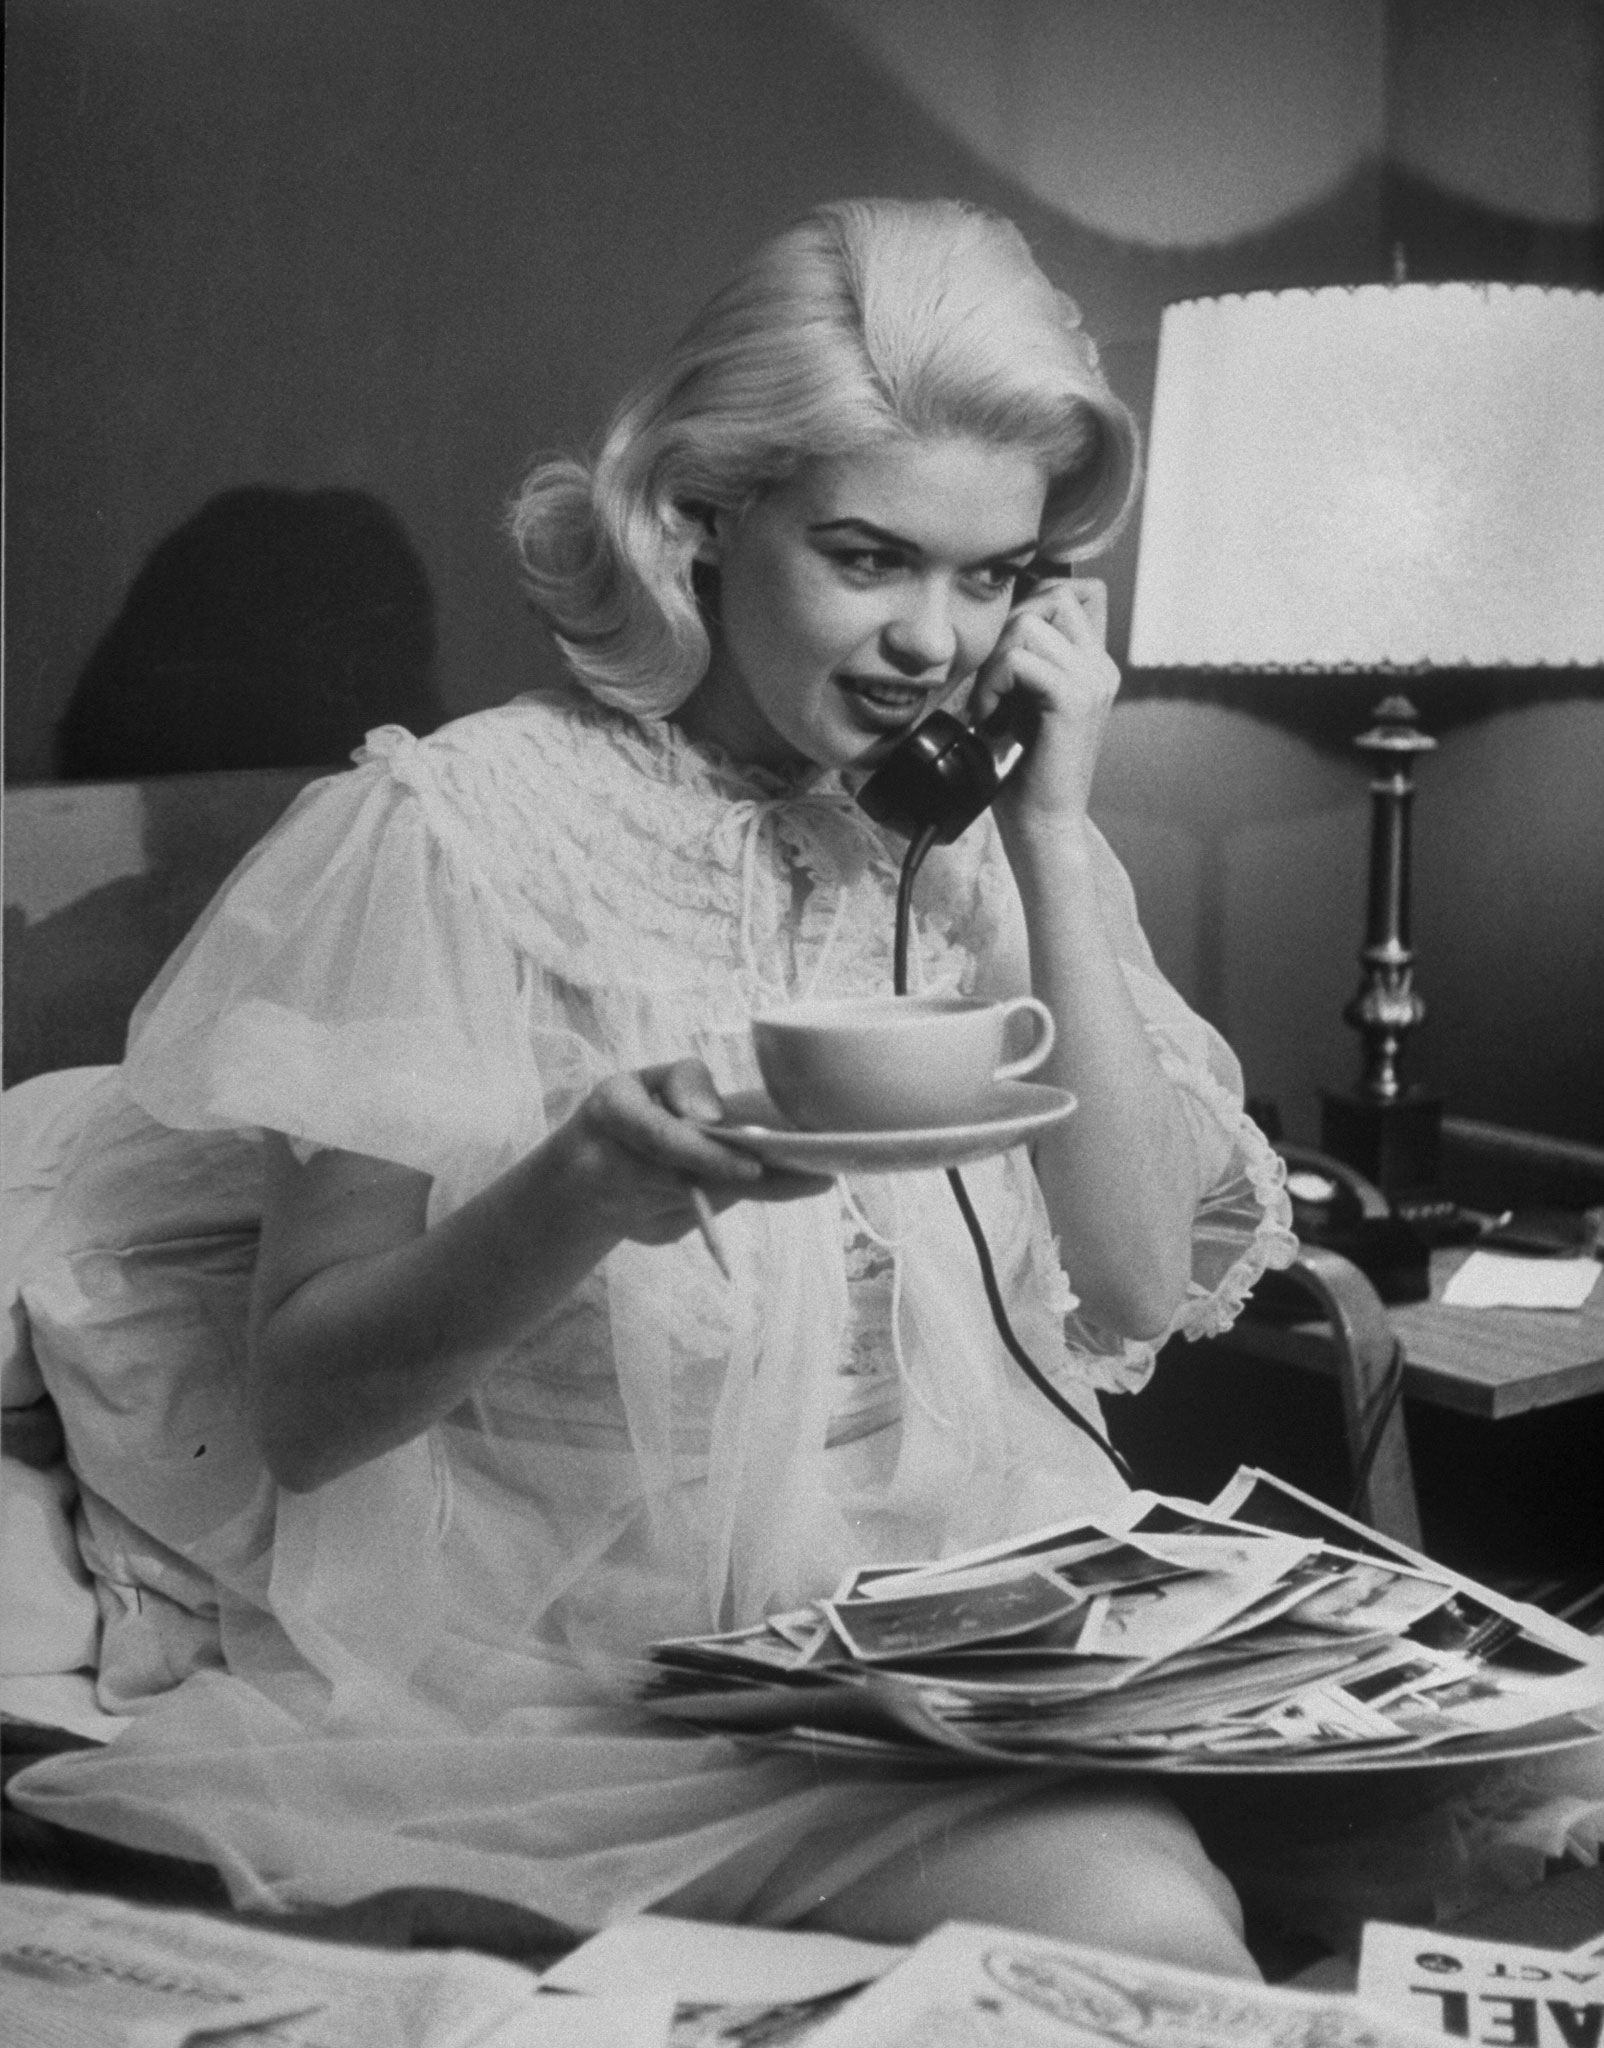 Jayne Mansfield on the phone, 1956.